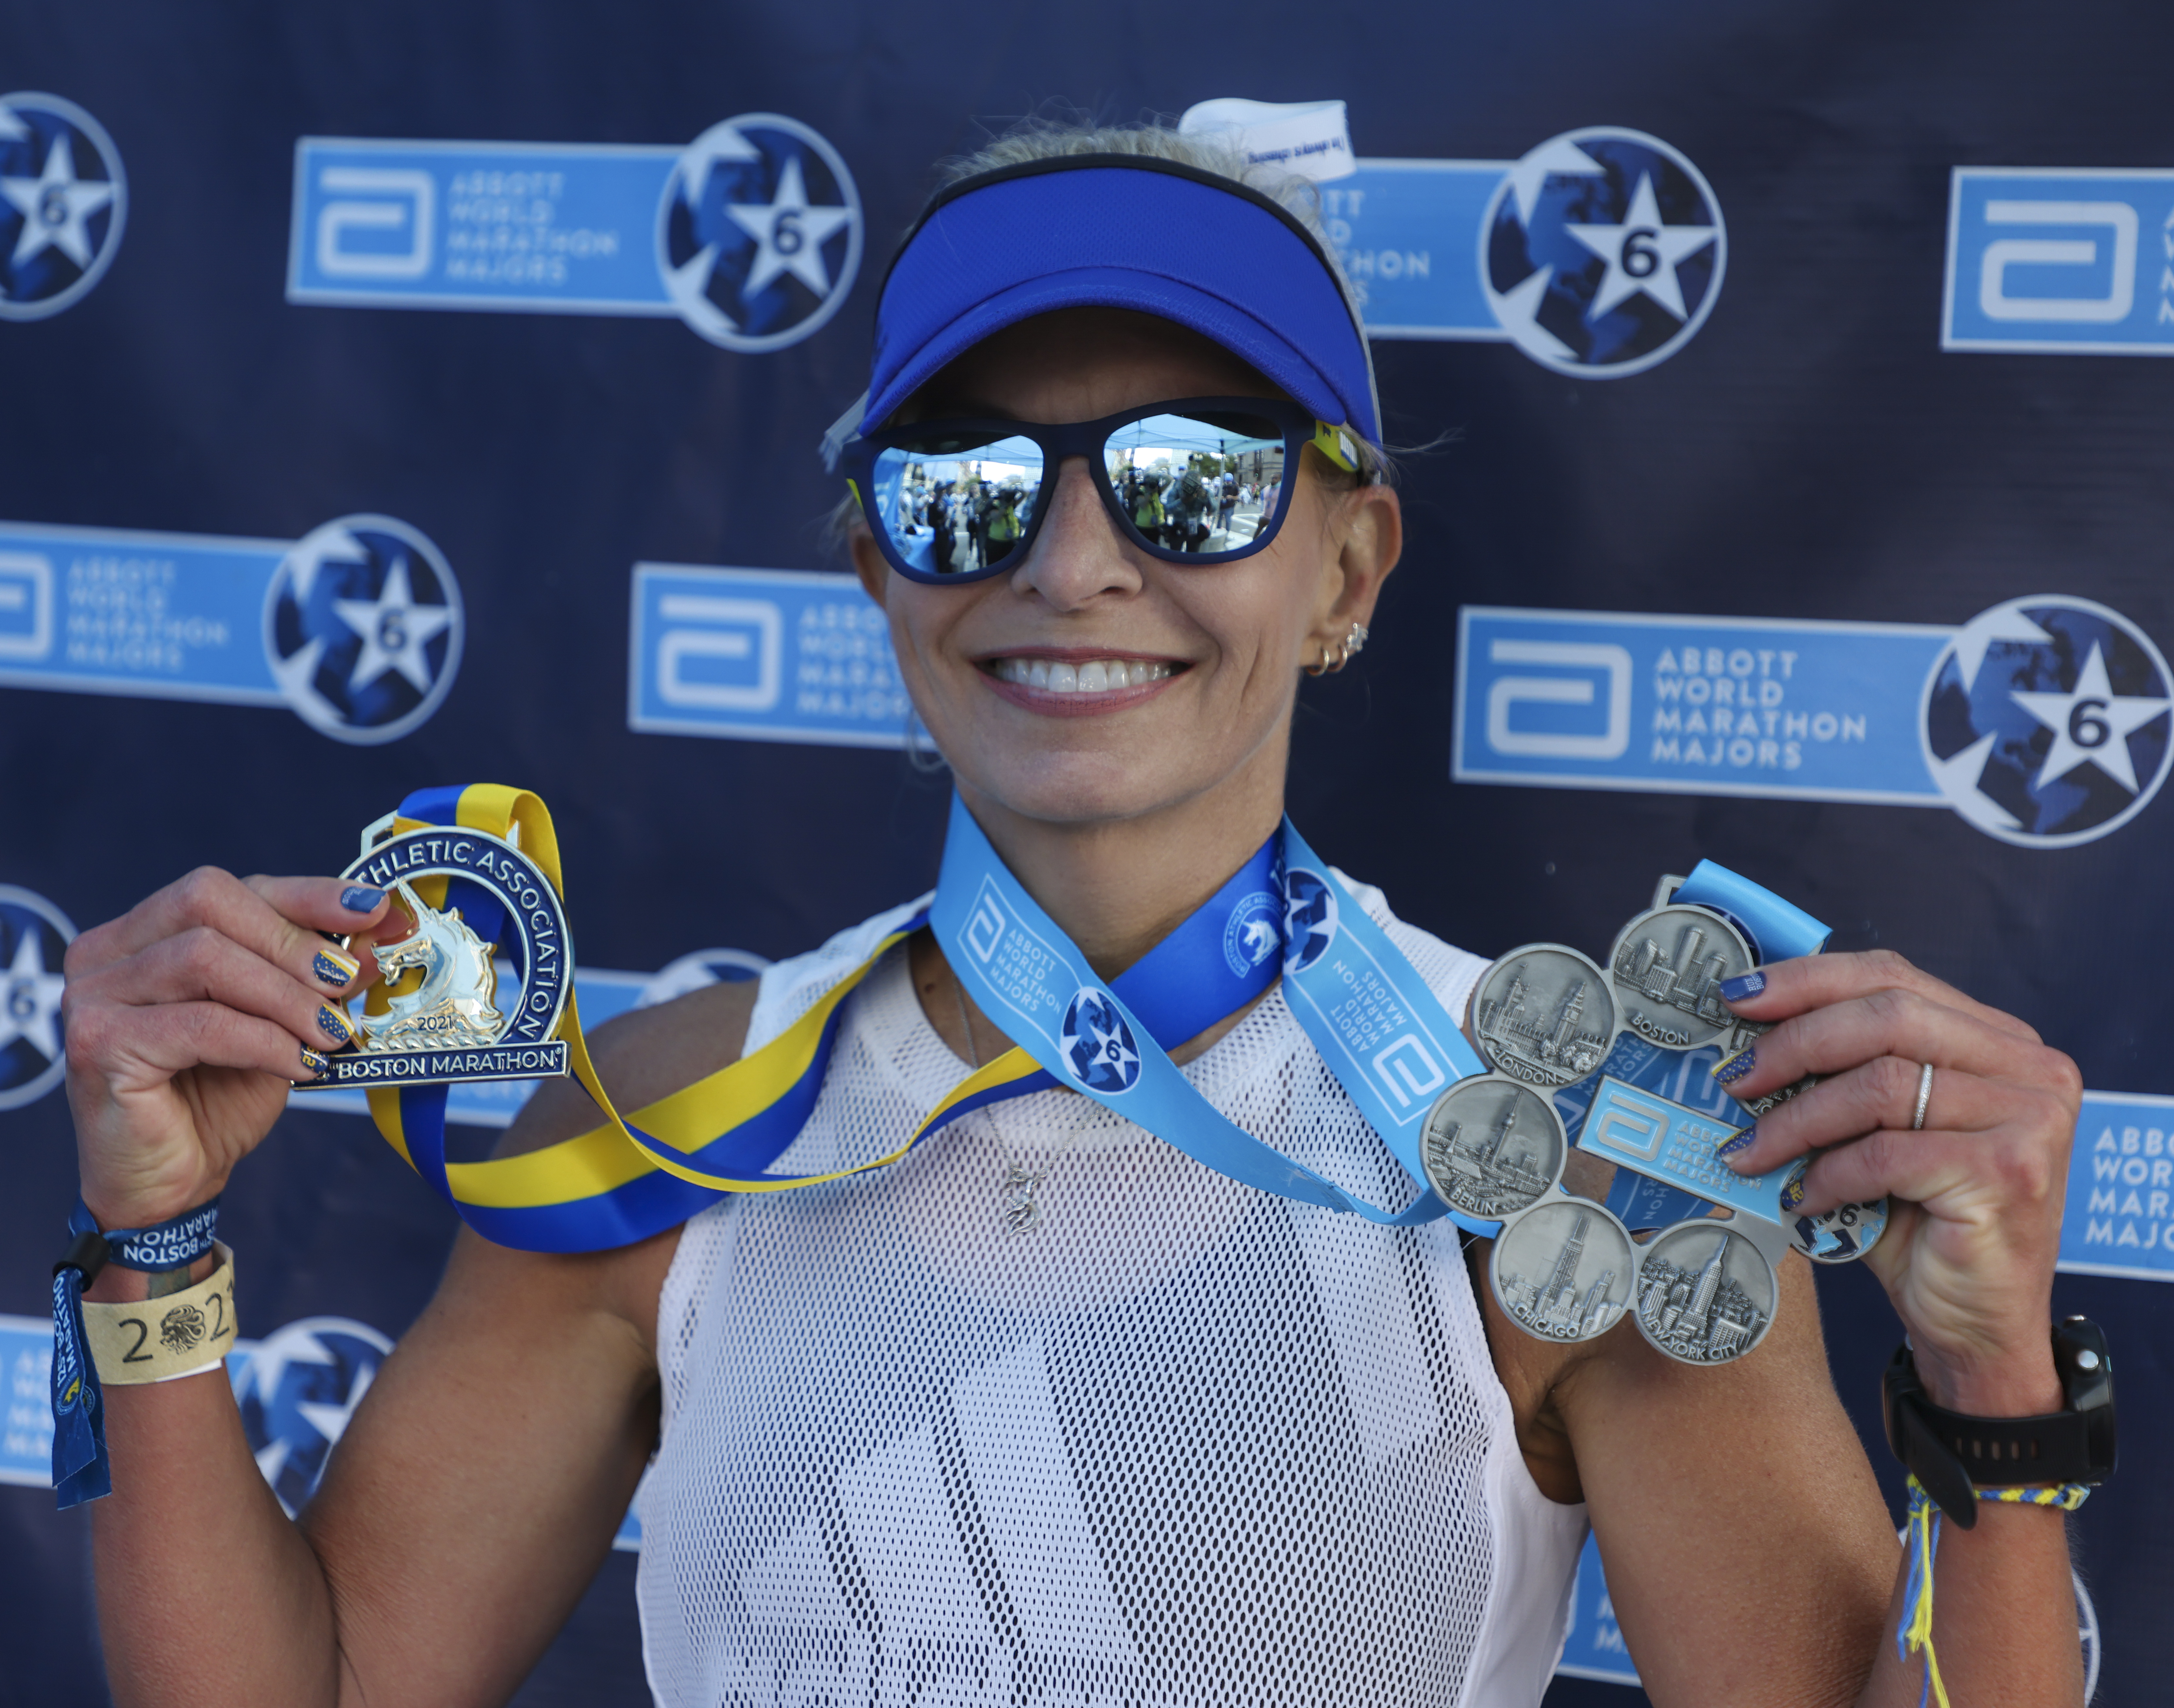 Amy Pelzel, 46, from Denton TX, a recipient of the World Marathon Majors “Six Star” medals, after the finish line of the 125th Boston Marathon in Boston on Oct. 11, 2021.